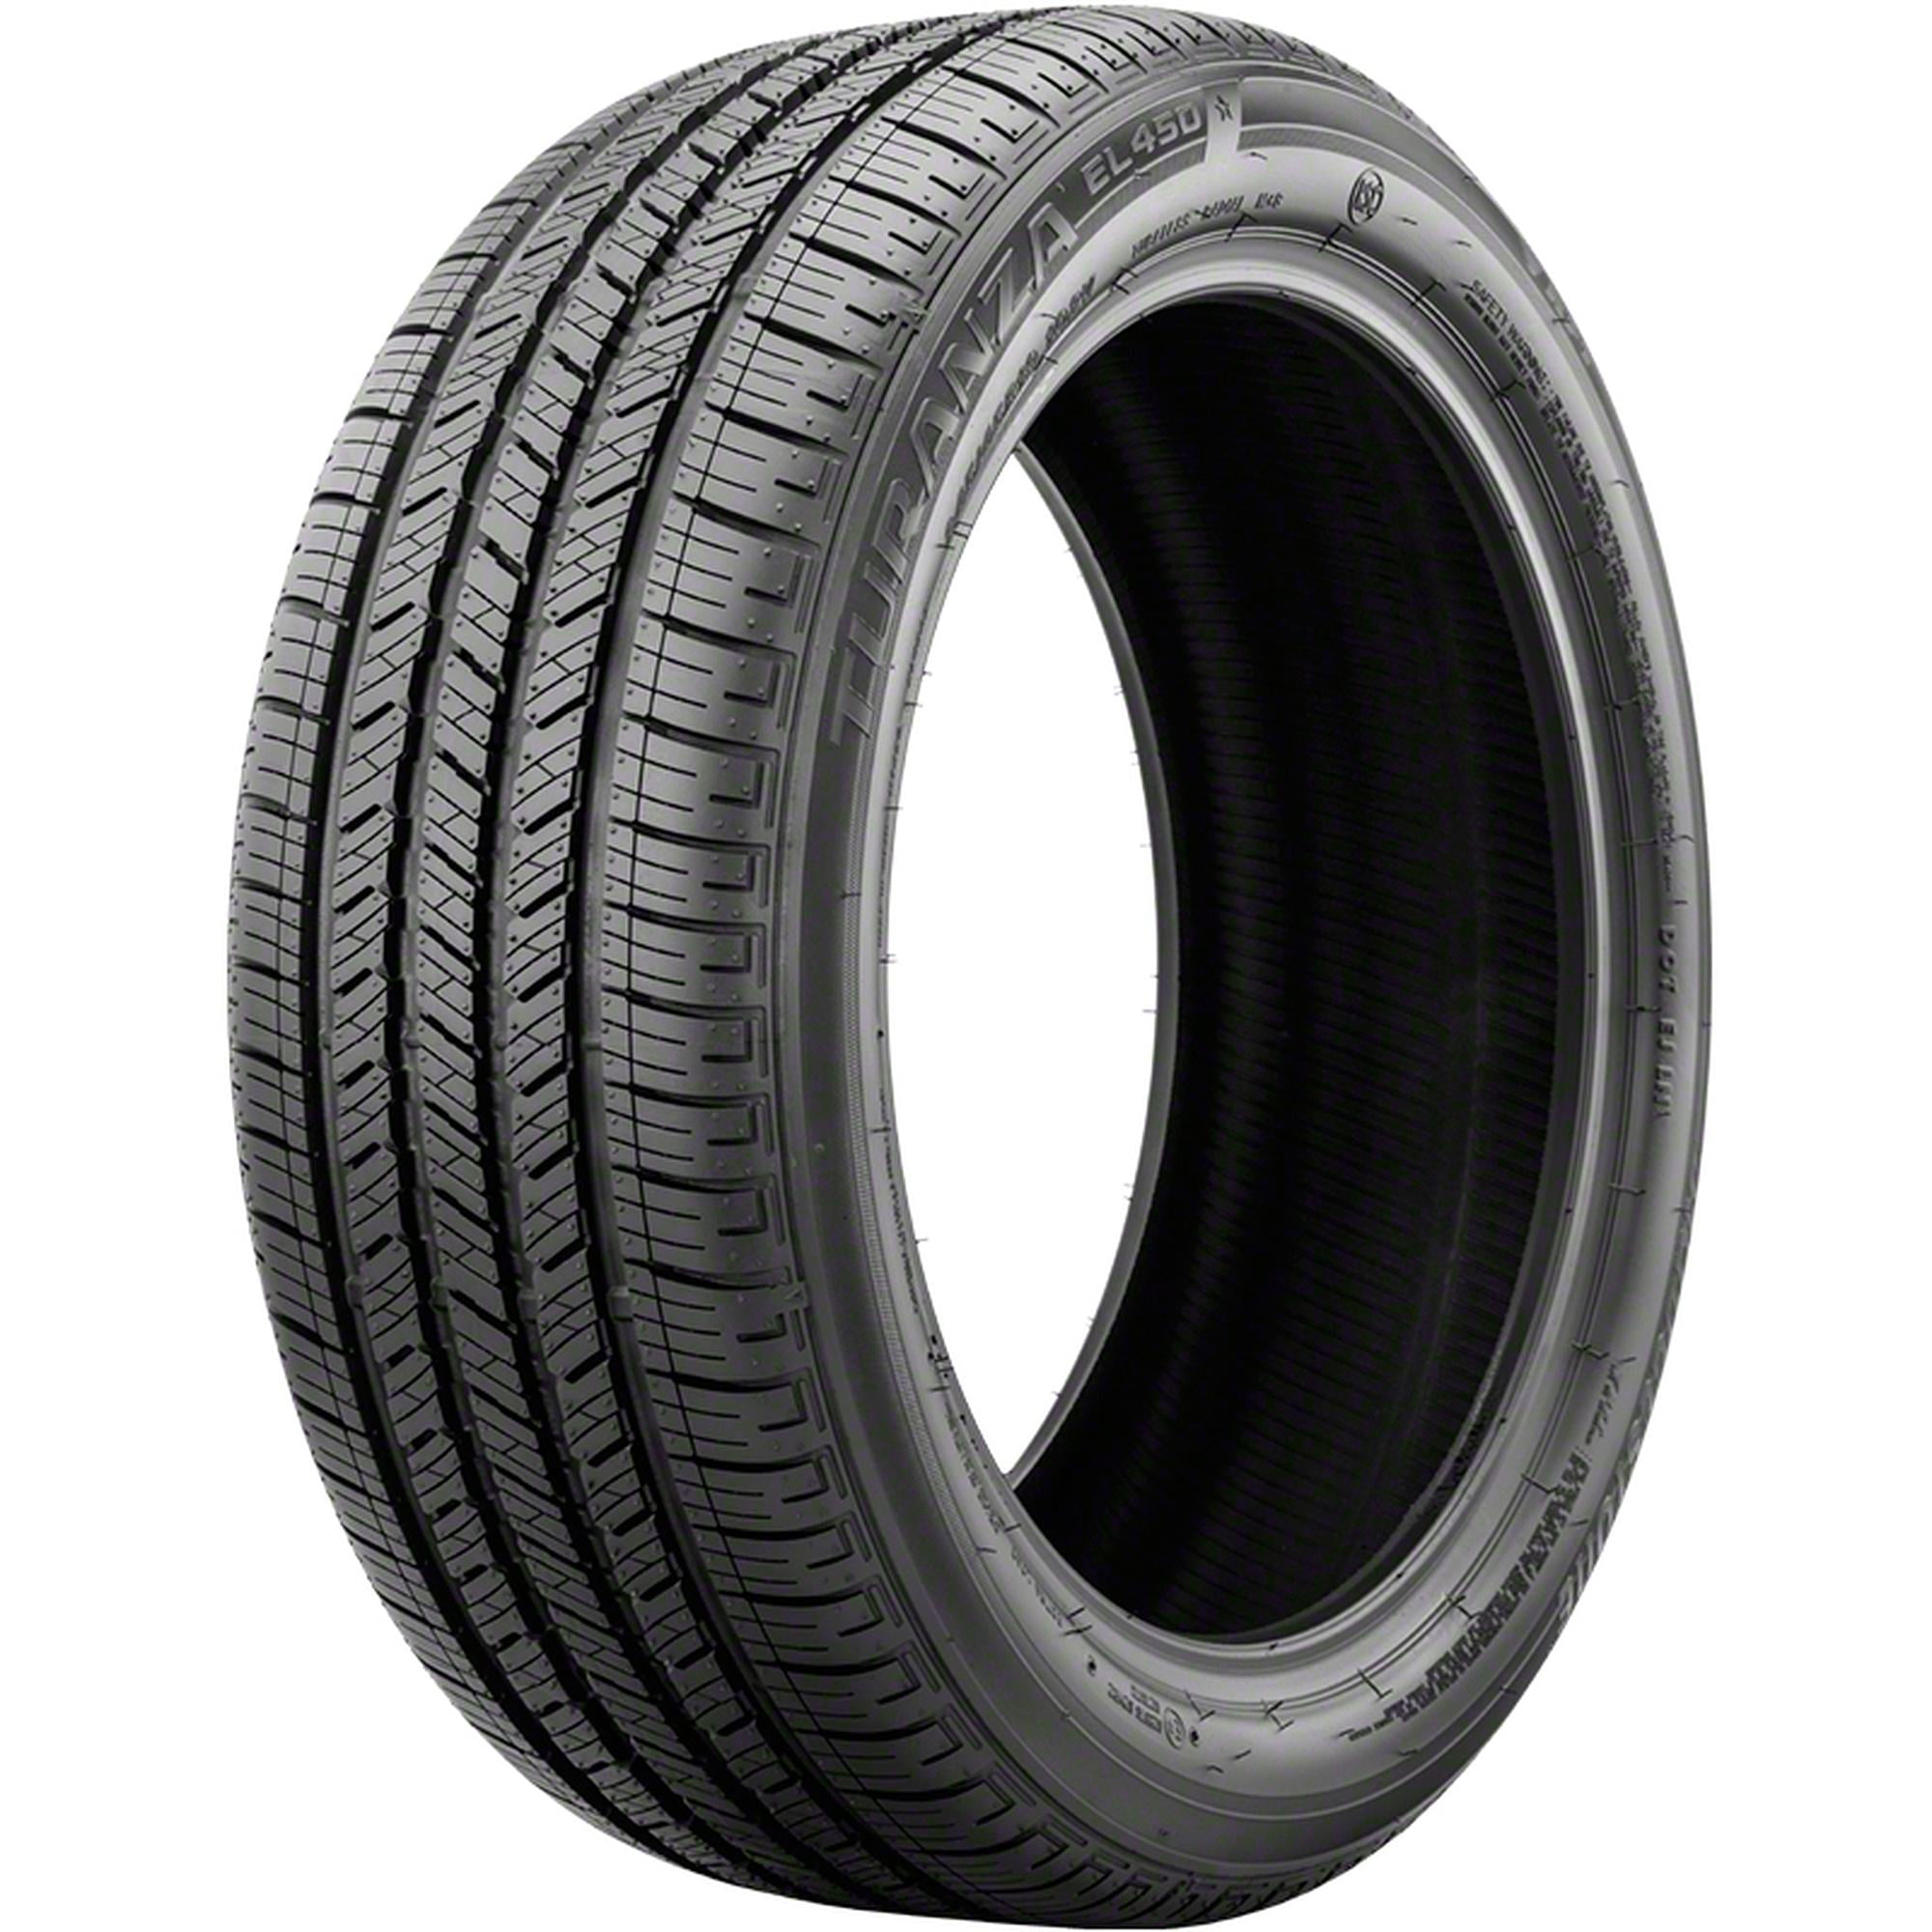 Bridgestone Turanza EL450 RFT All Season 245/45R20 99V Passenger Tire